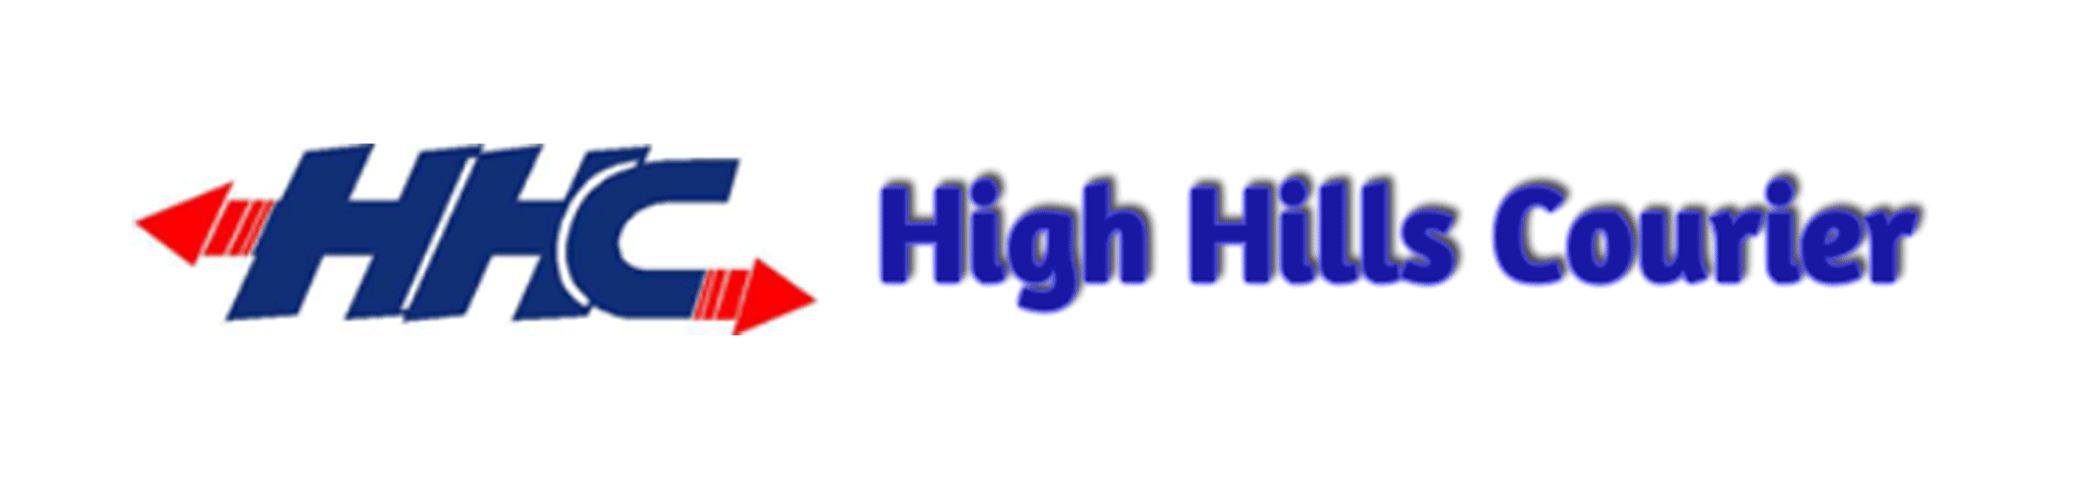 High Hills Courier